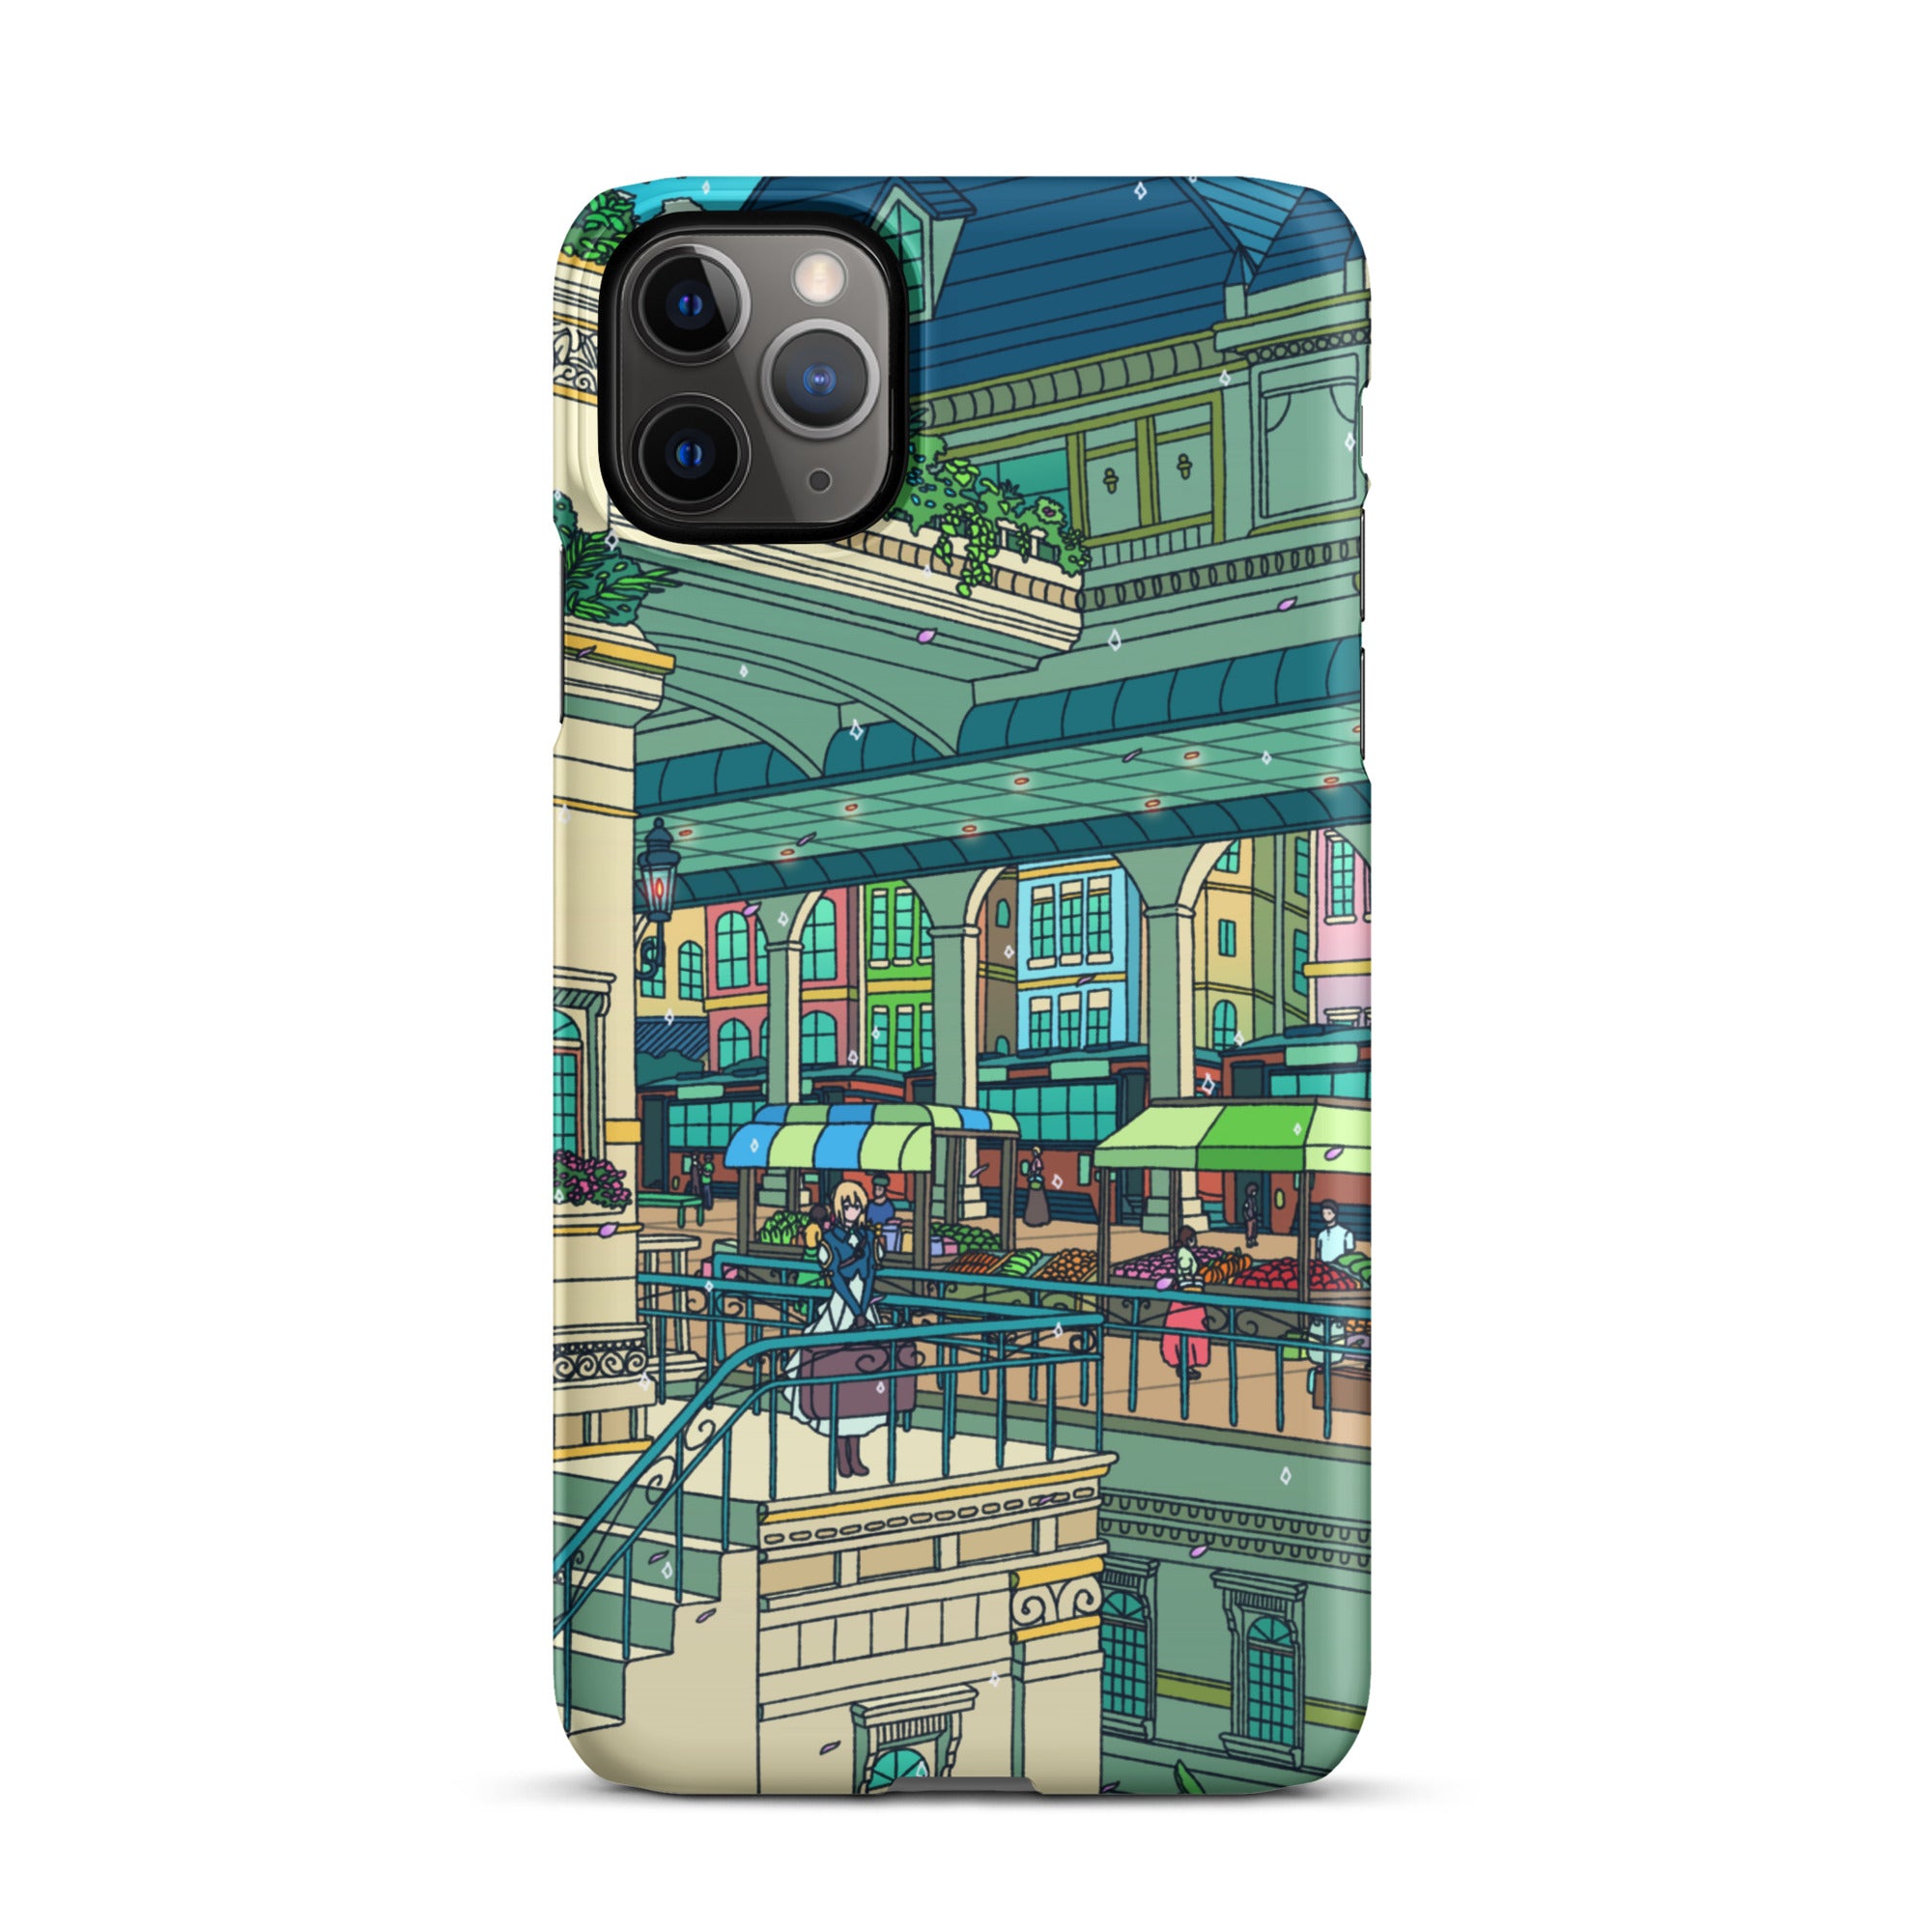 Evergarden Train Station iPhone Case